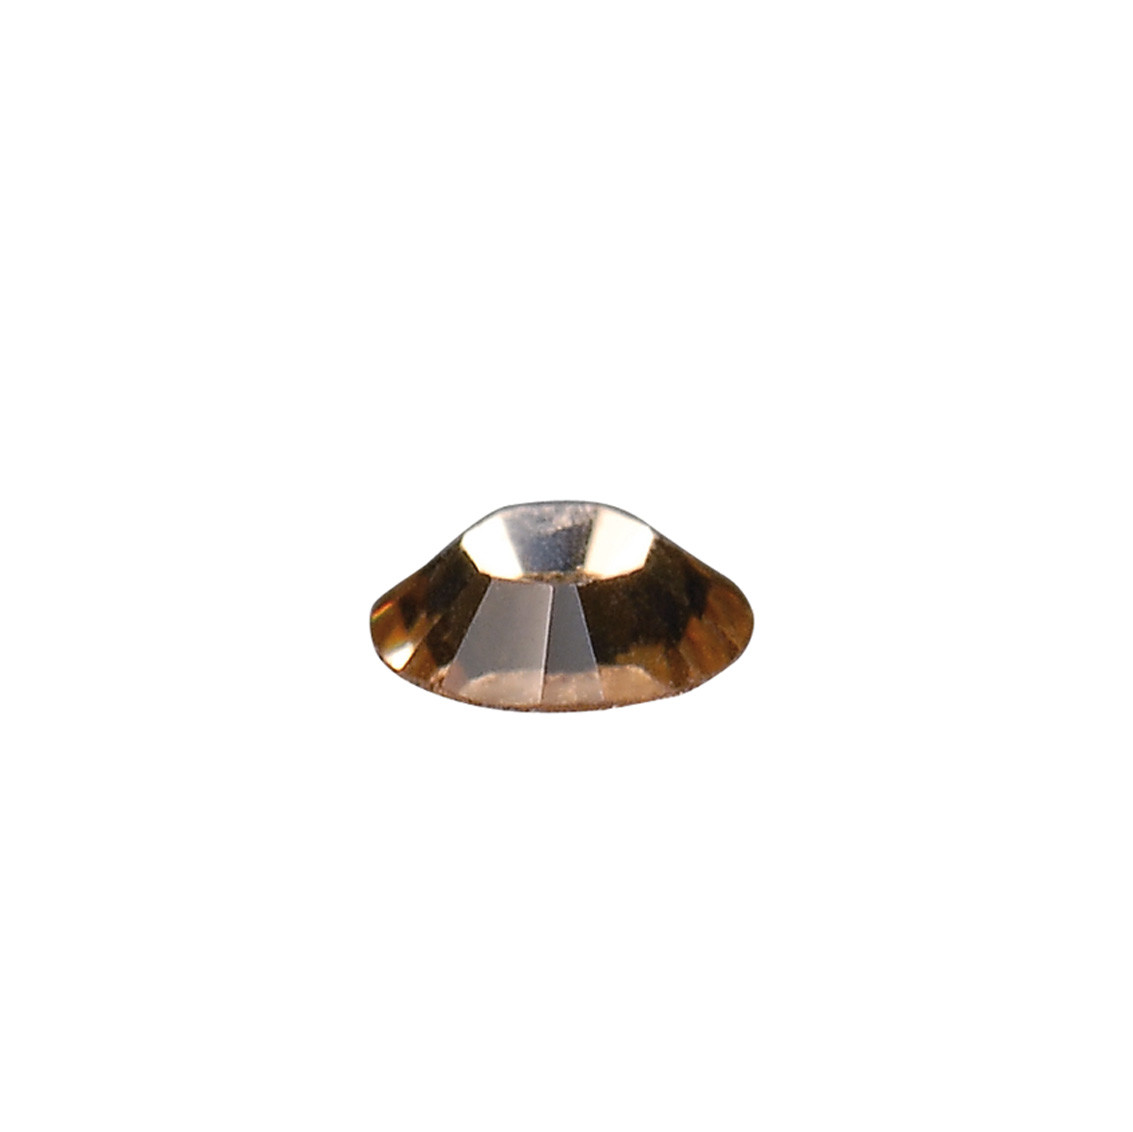 Swarovski® Crystals for Nail Art Light Topaz size SS6 1440 pcs.